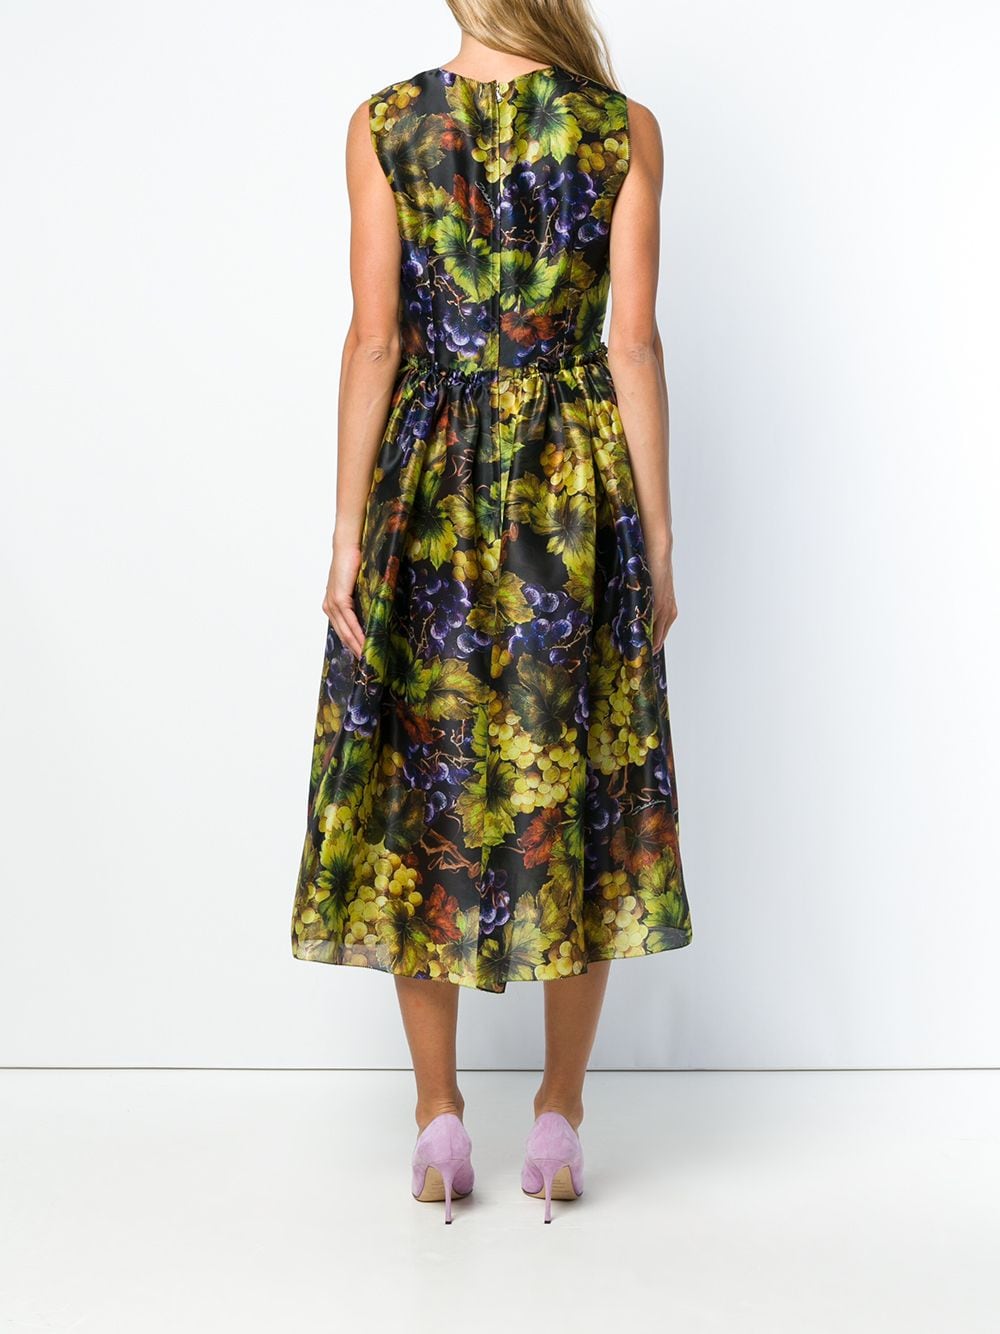 Dolce \u0026 Gabbana Grapes Print Dress Aw18 